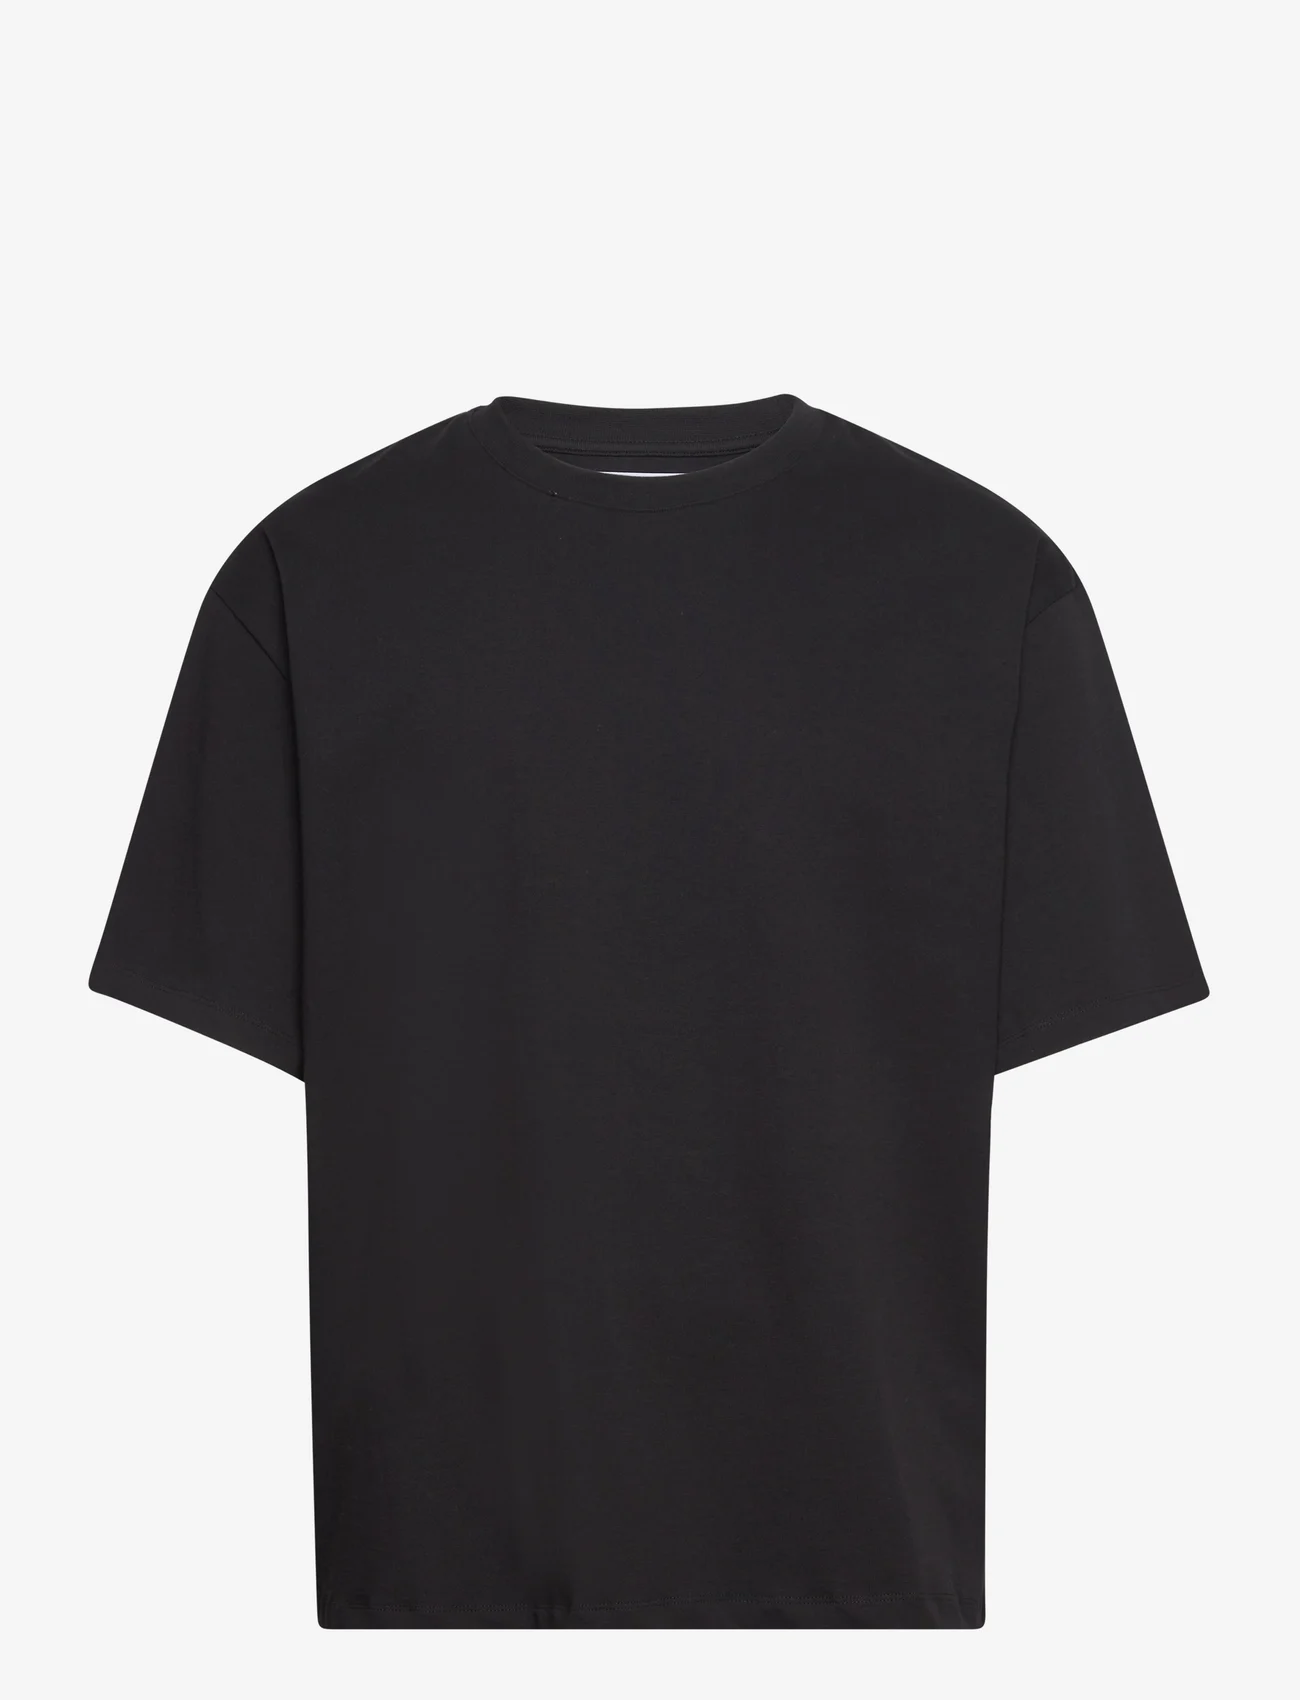 Garment Project - GP Heavy Tee - Black - short-sleeved t-shirts - black - 0